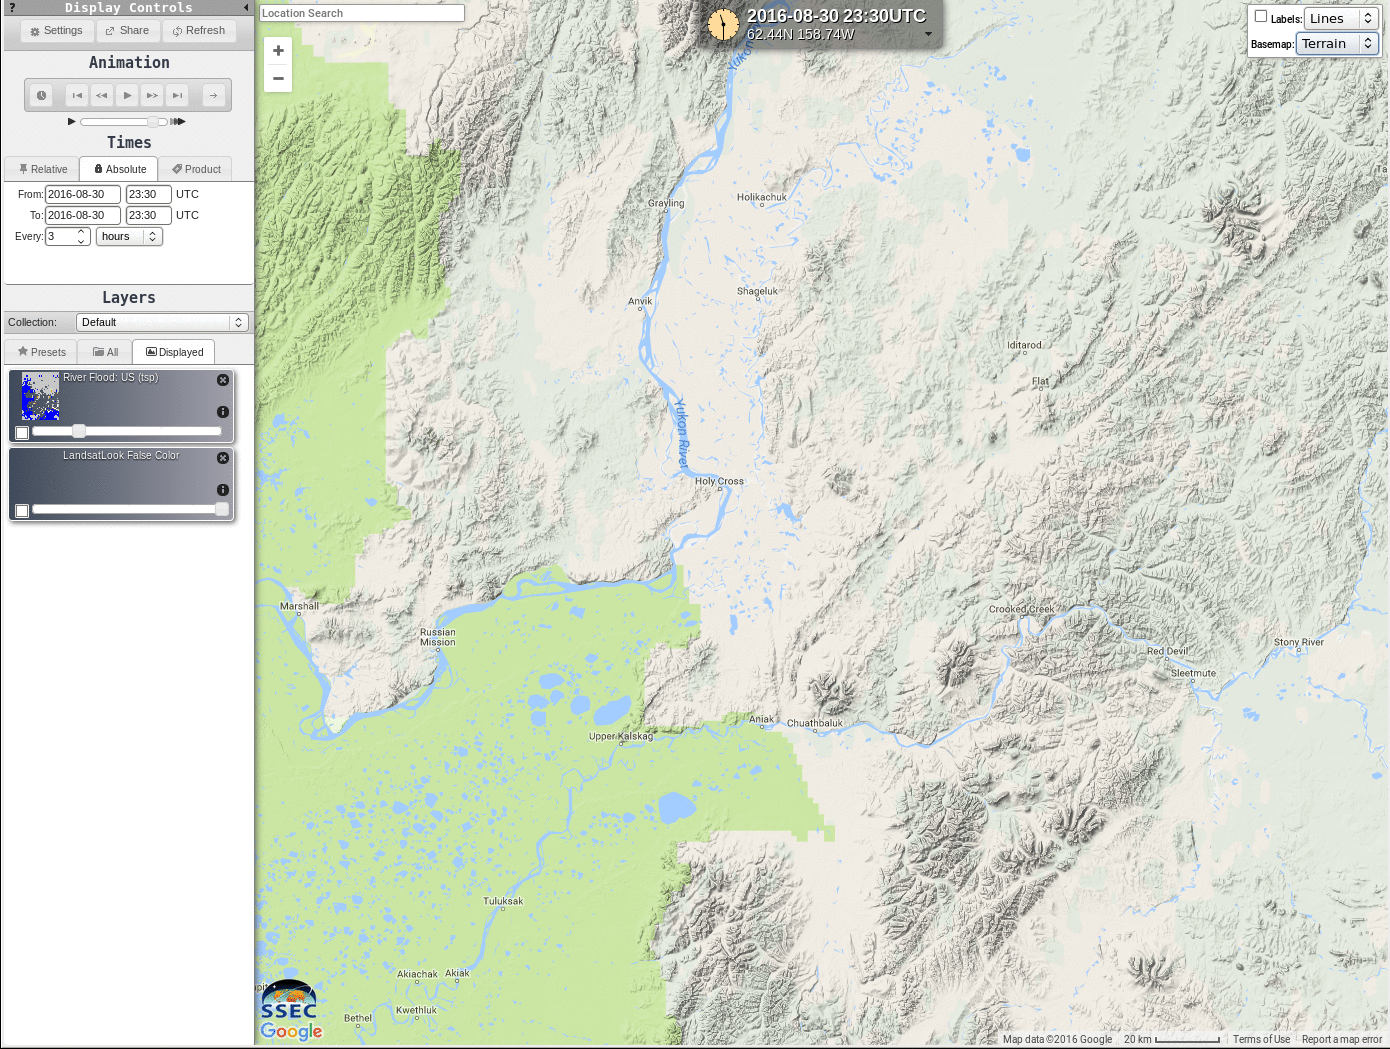 Google Maps of west central Alaska, the JPSS River Flood Product and Landsat-8 False Color Imagery, 30 August 2016 [click to enlarge]